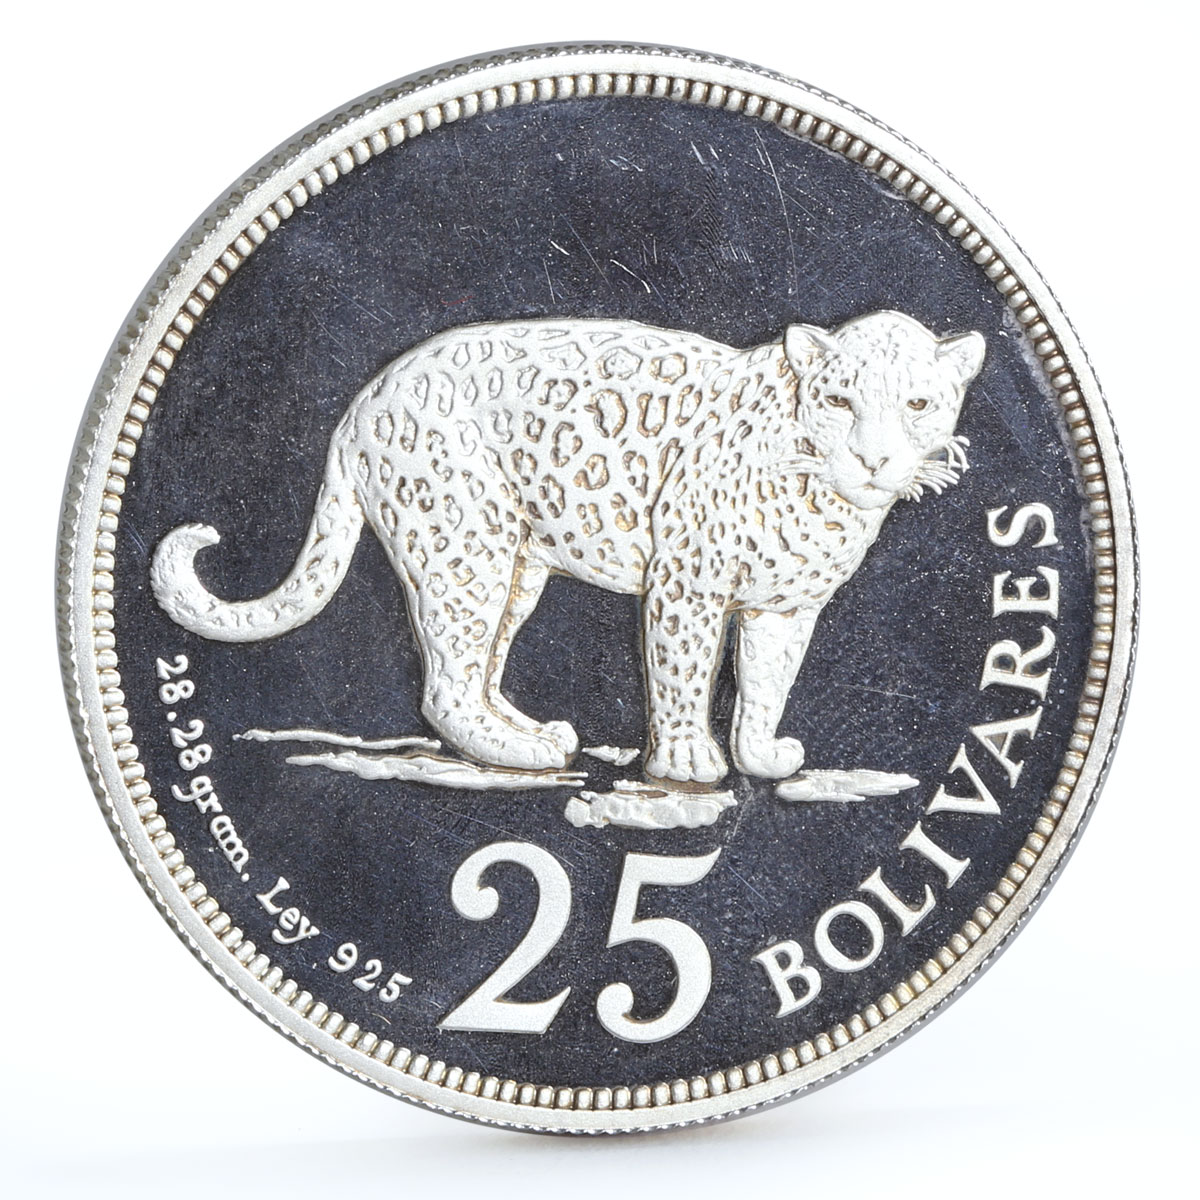 Venezuela 25 bolivares Endangered Widllife Leopard Cat Fauna silver coin 1975